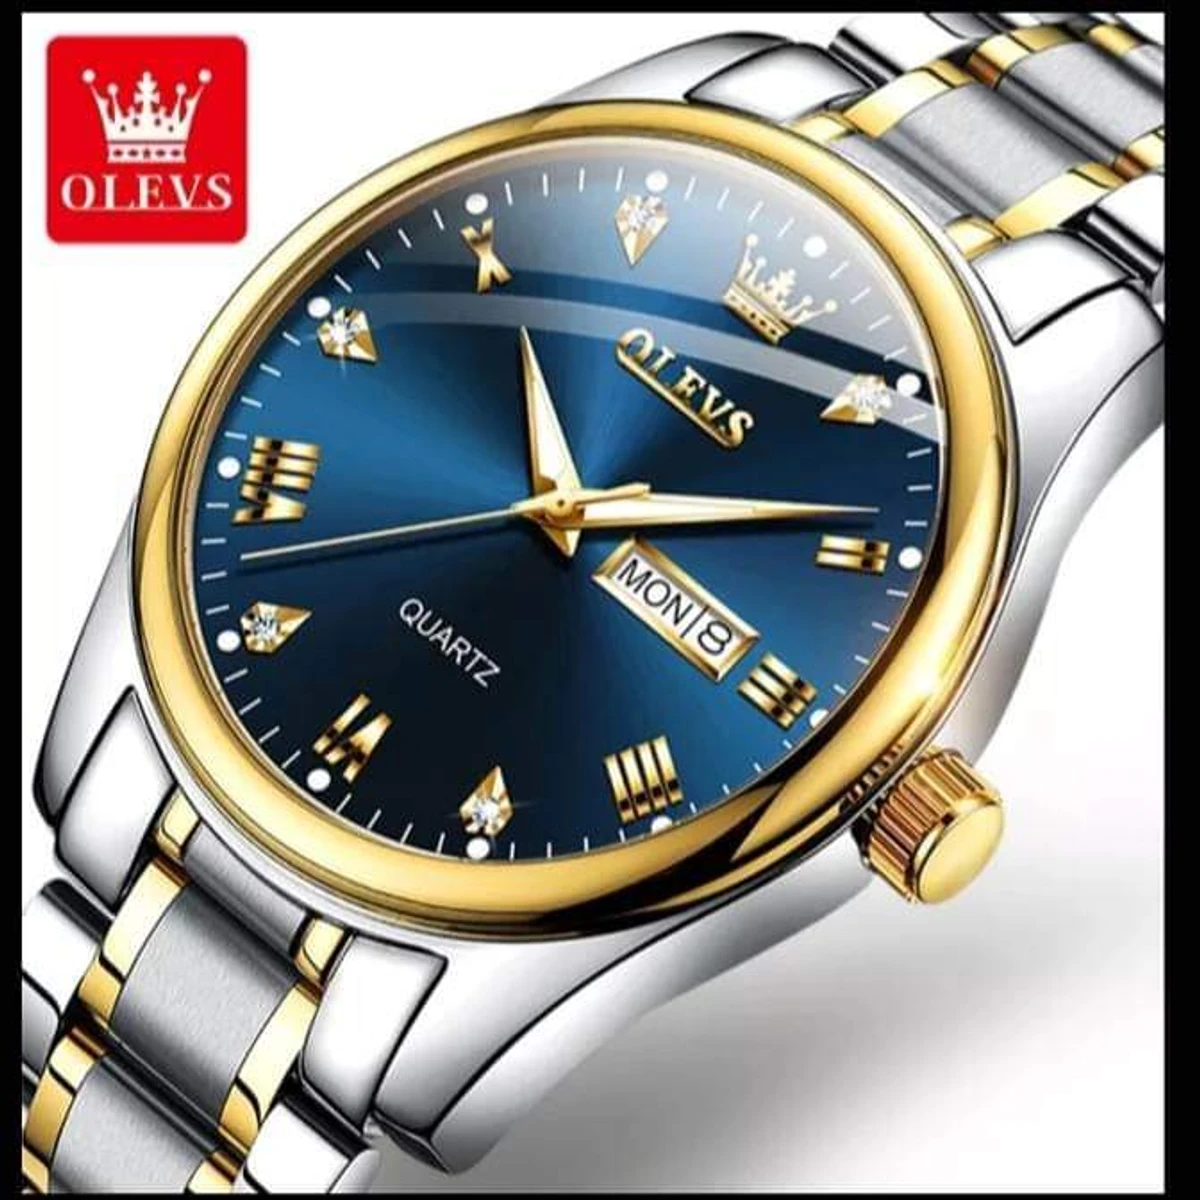 OLEVS 5563 Quartz wrist watch waterproof watch for Men- Silver & Golden & Blue